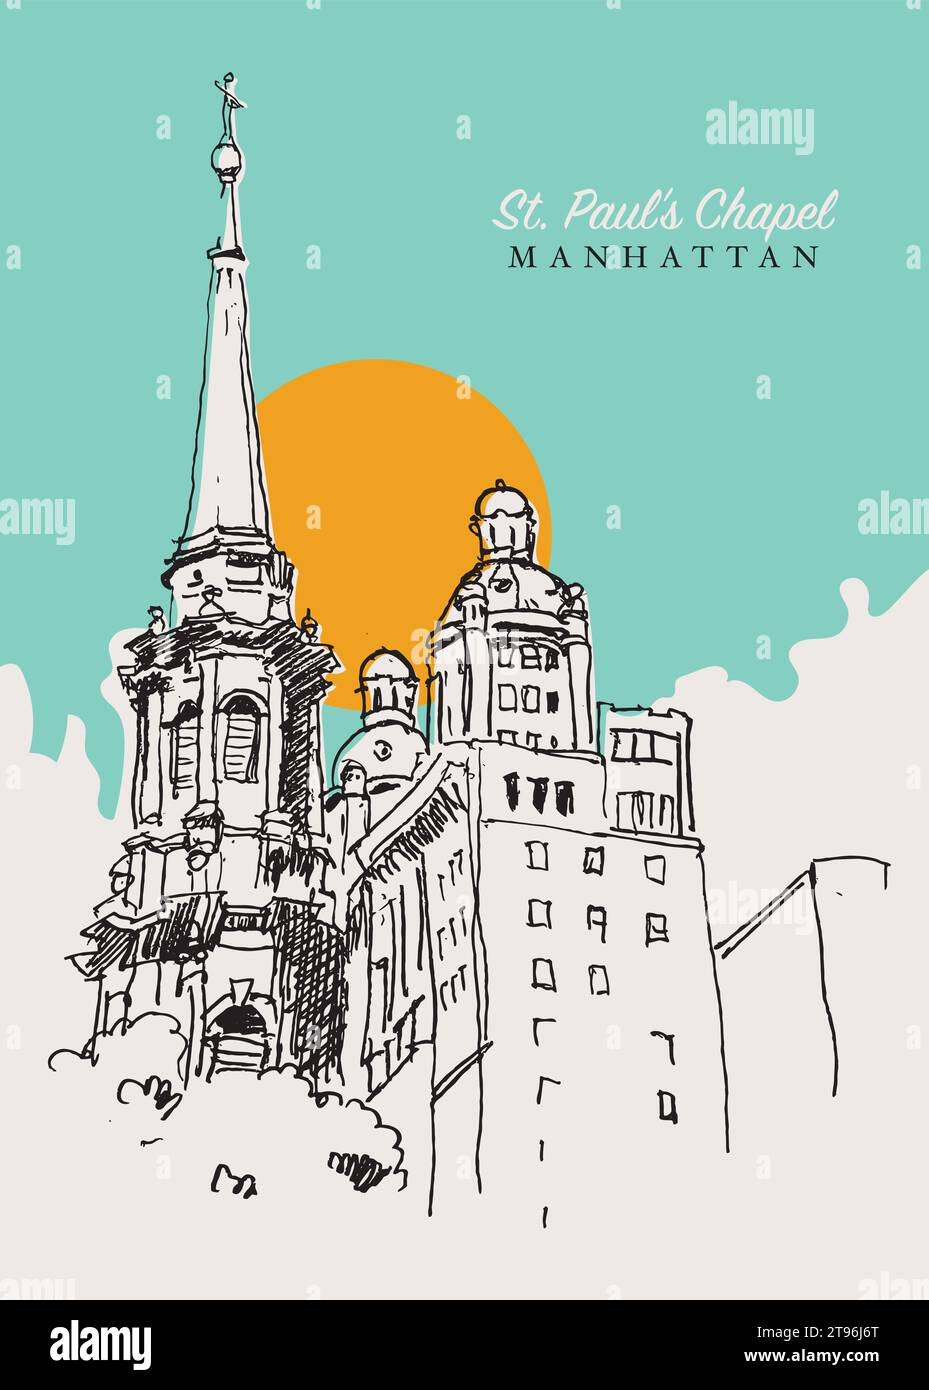 Vektor Hand gezeichnete Skizze Illustration des Kirchturms von St. Paul's Chapel in Manhattan, New York City, USA. Stock Vektor